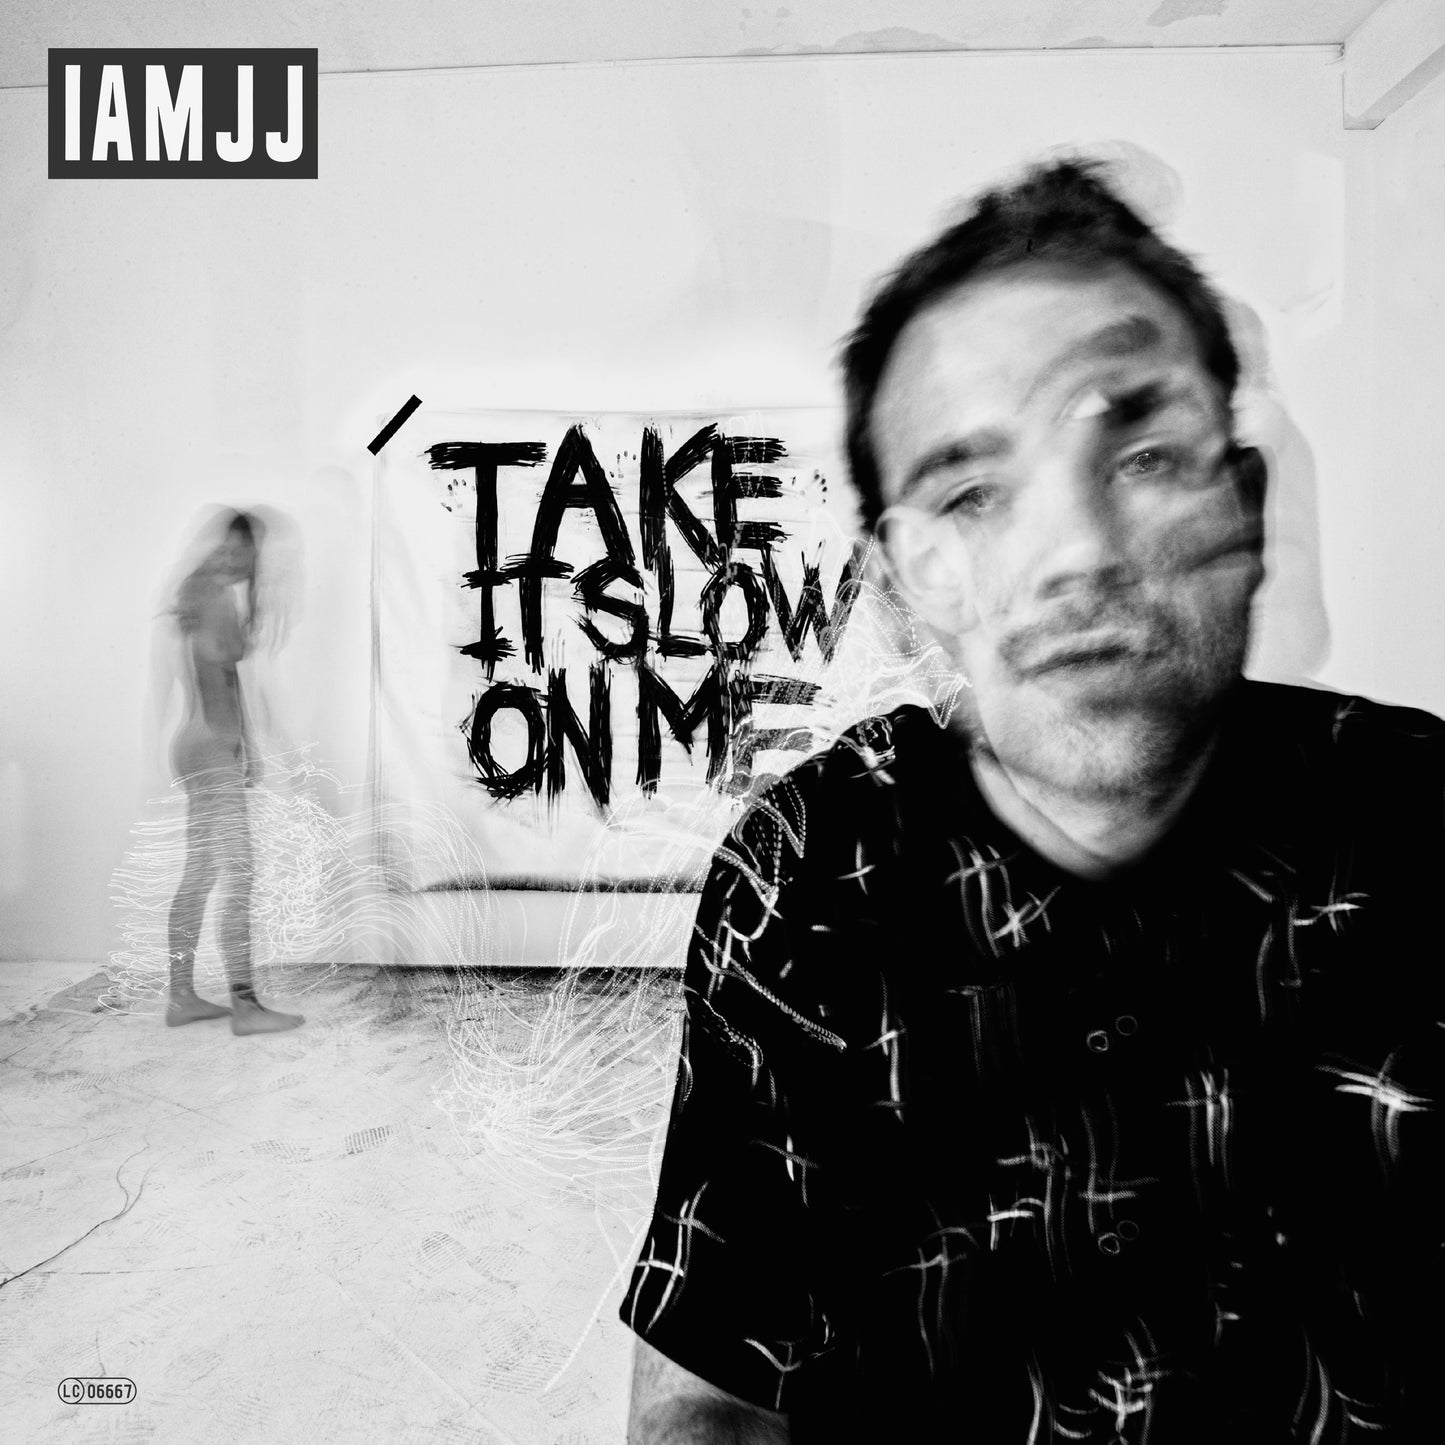 Iamjj - Take It Slow On Met